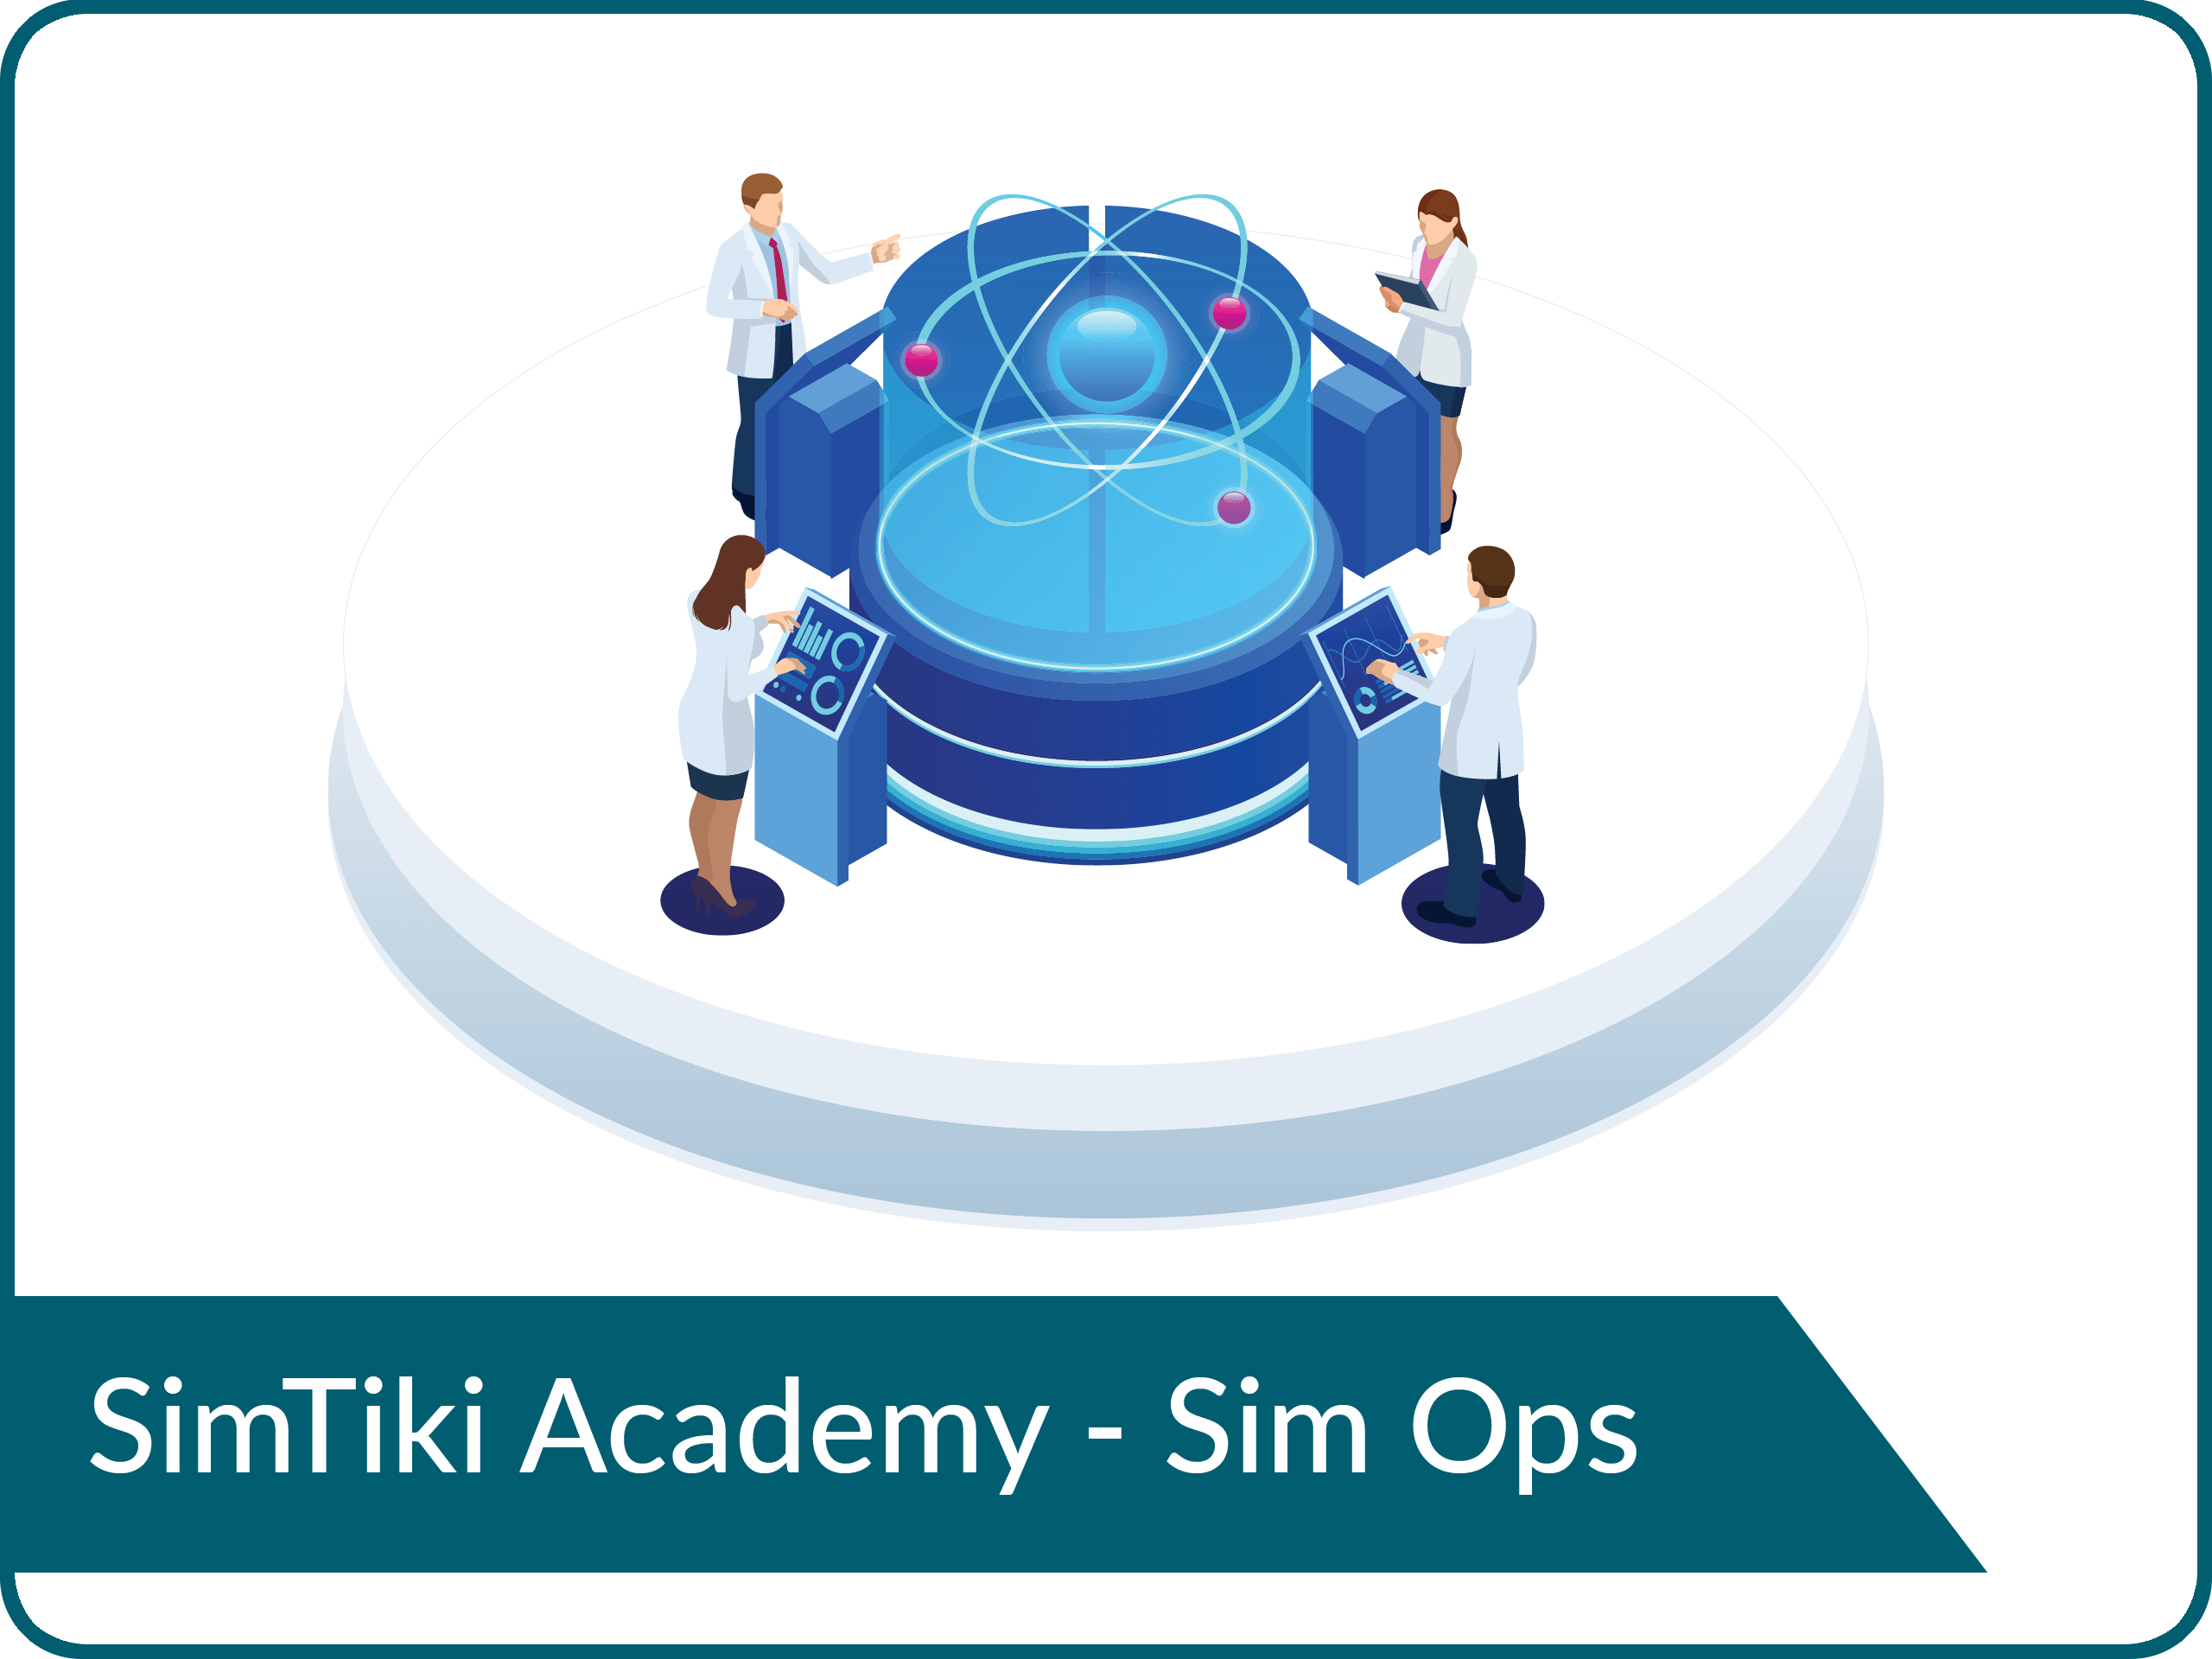 simtiki academy sim ops logo